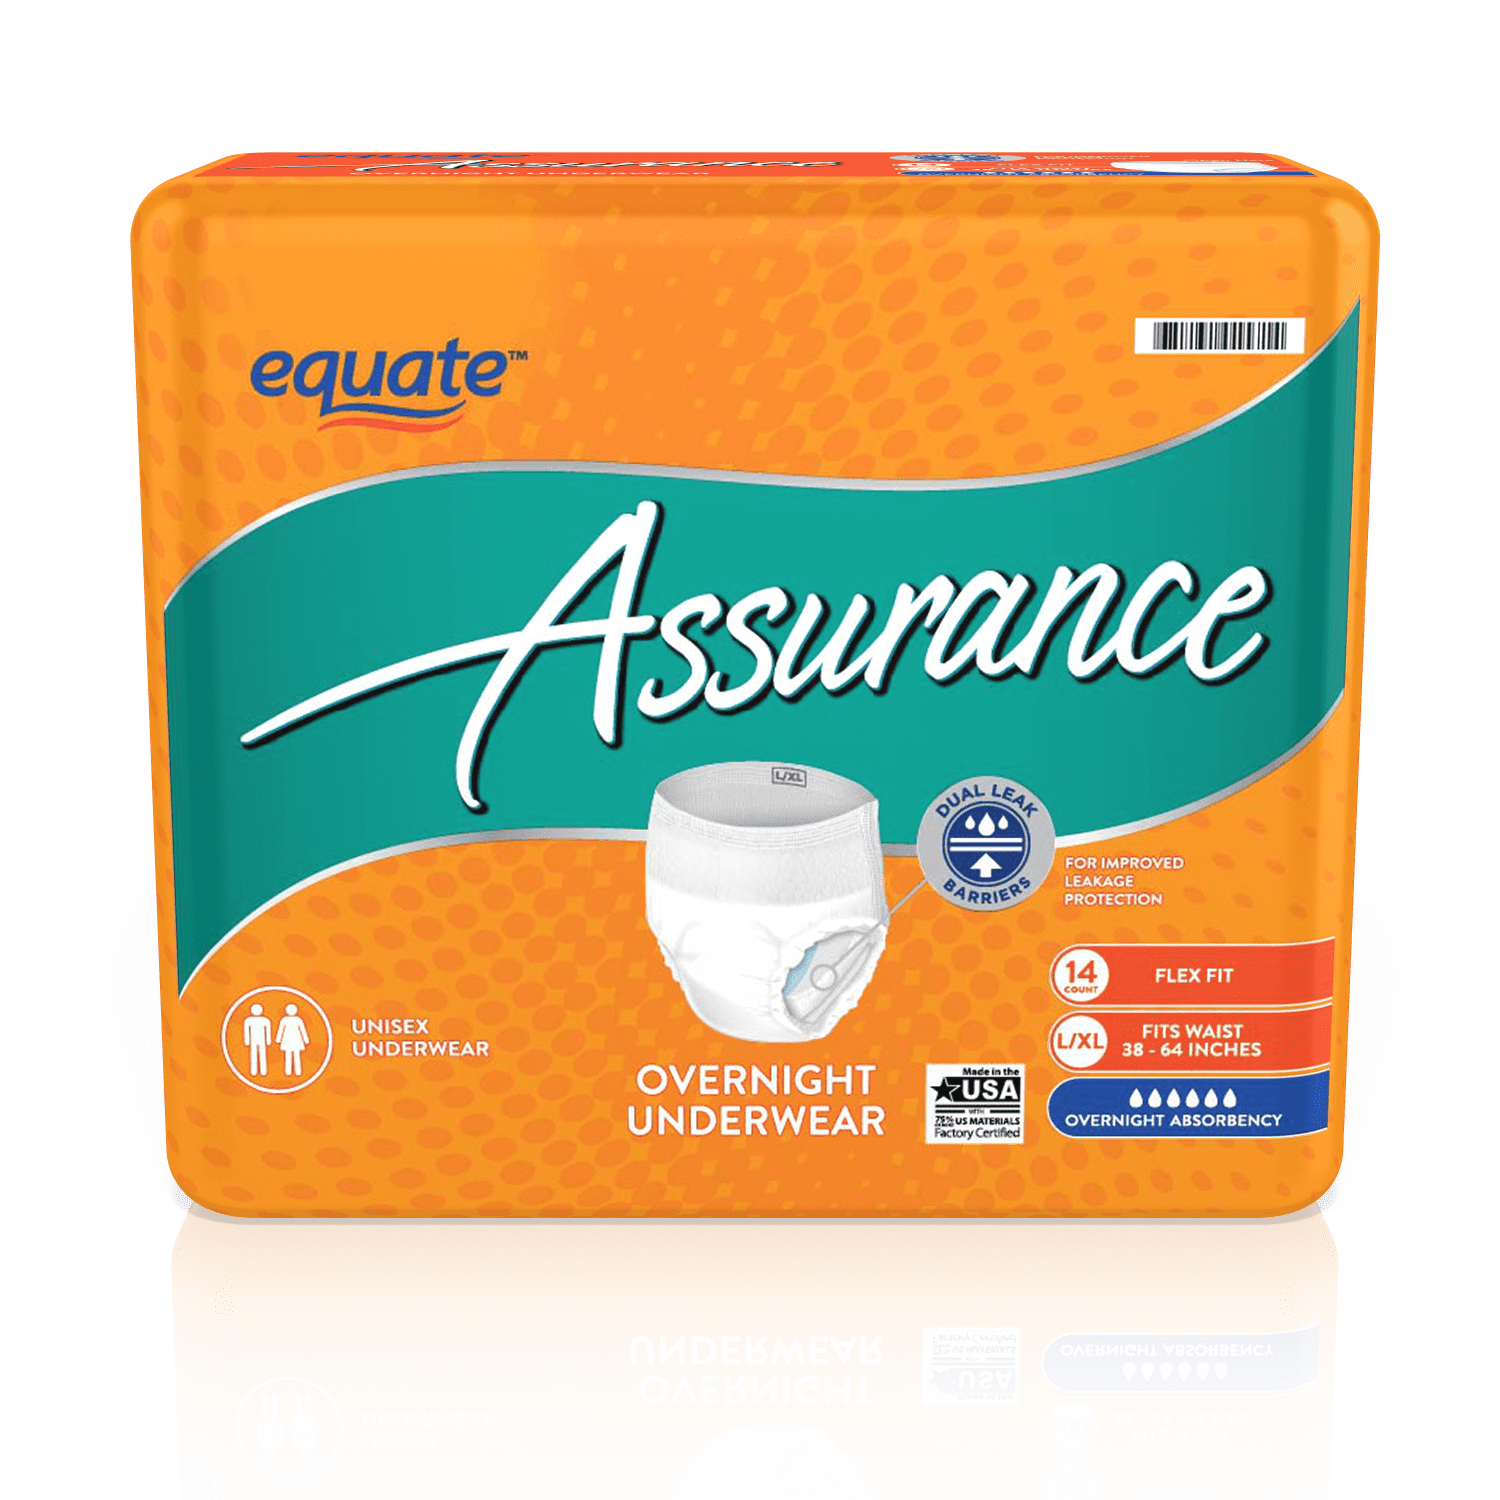 Assurance Unisex Overnight Underwear, Overnight Absorbency, L/XL, 14 Count  